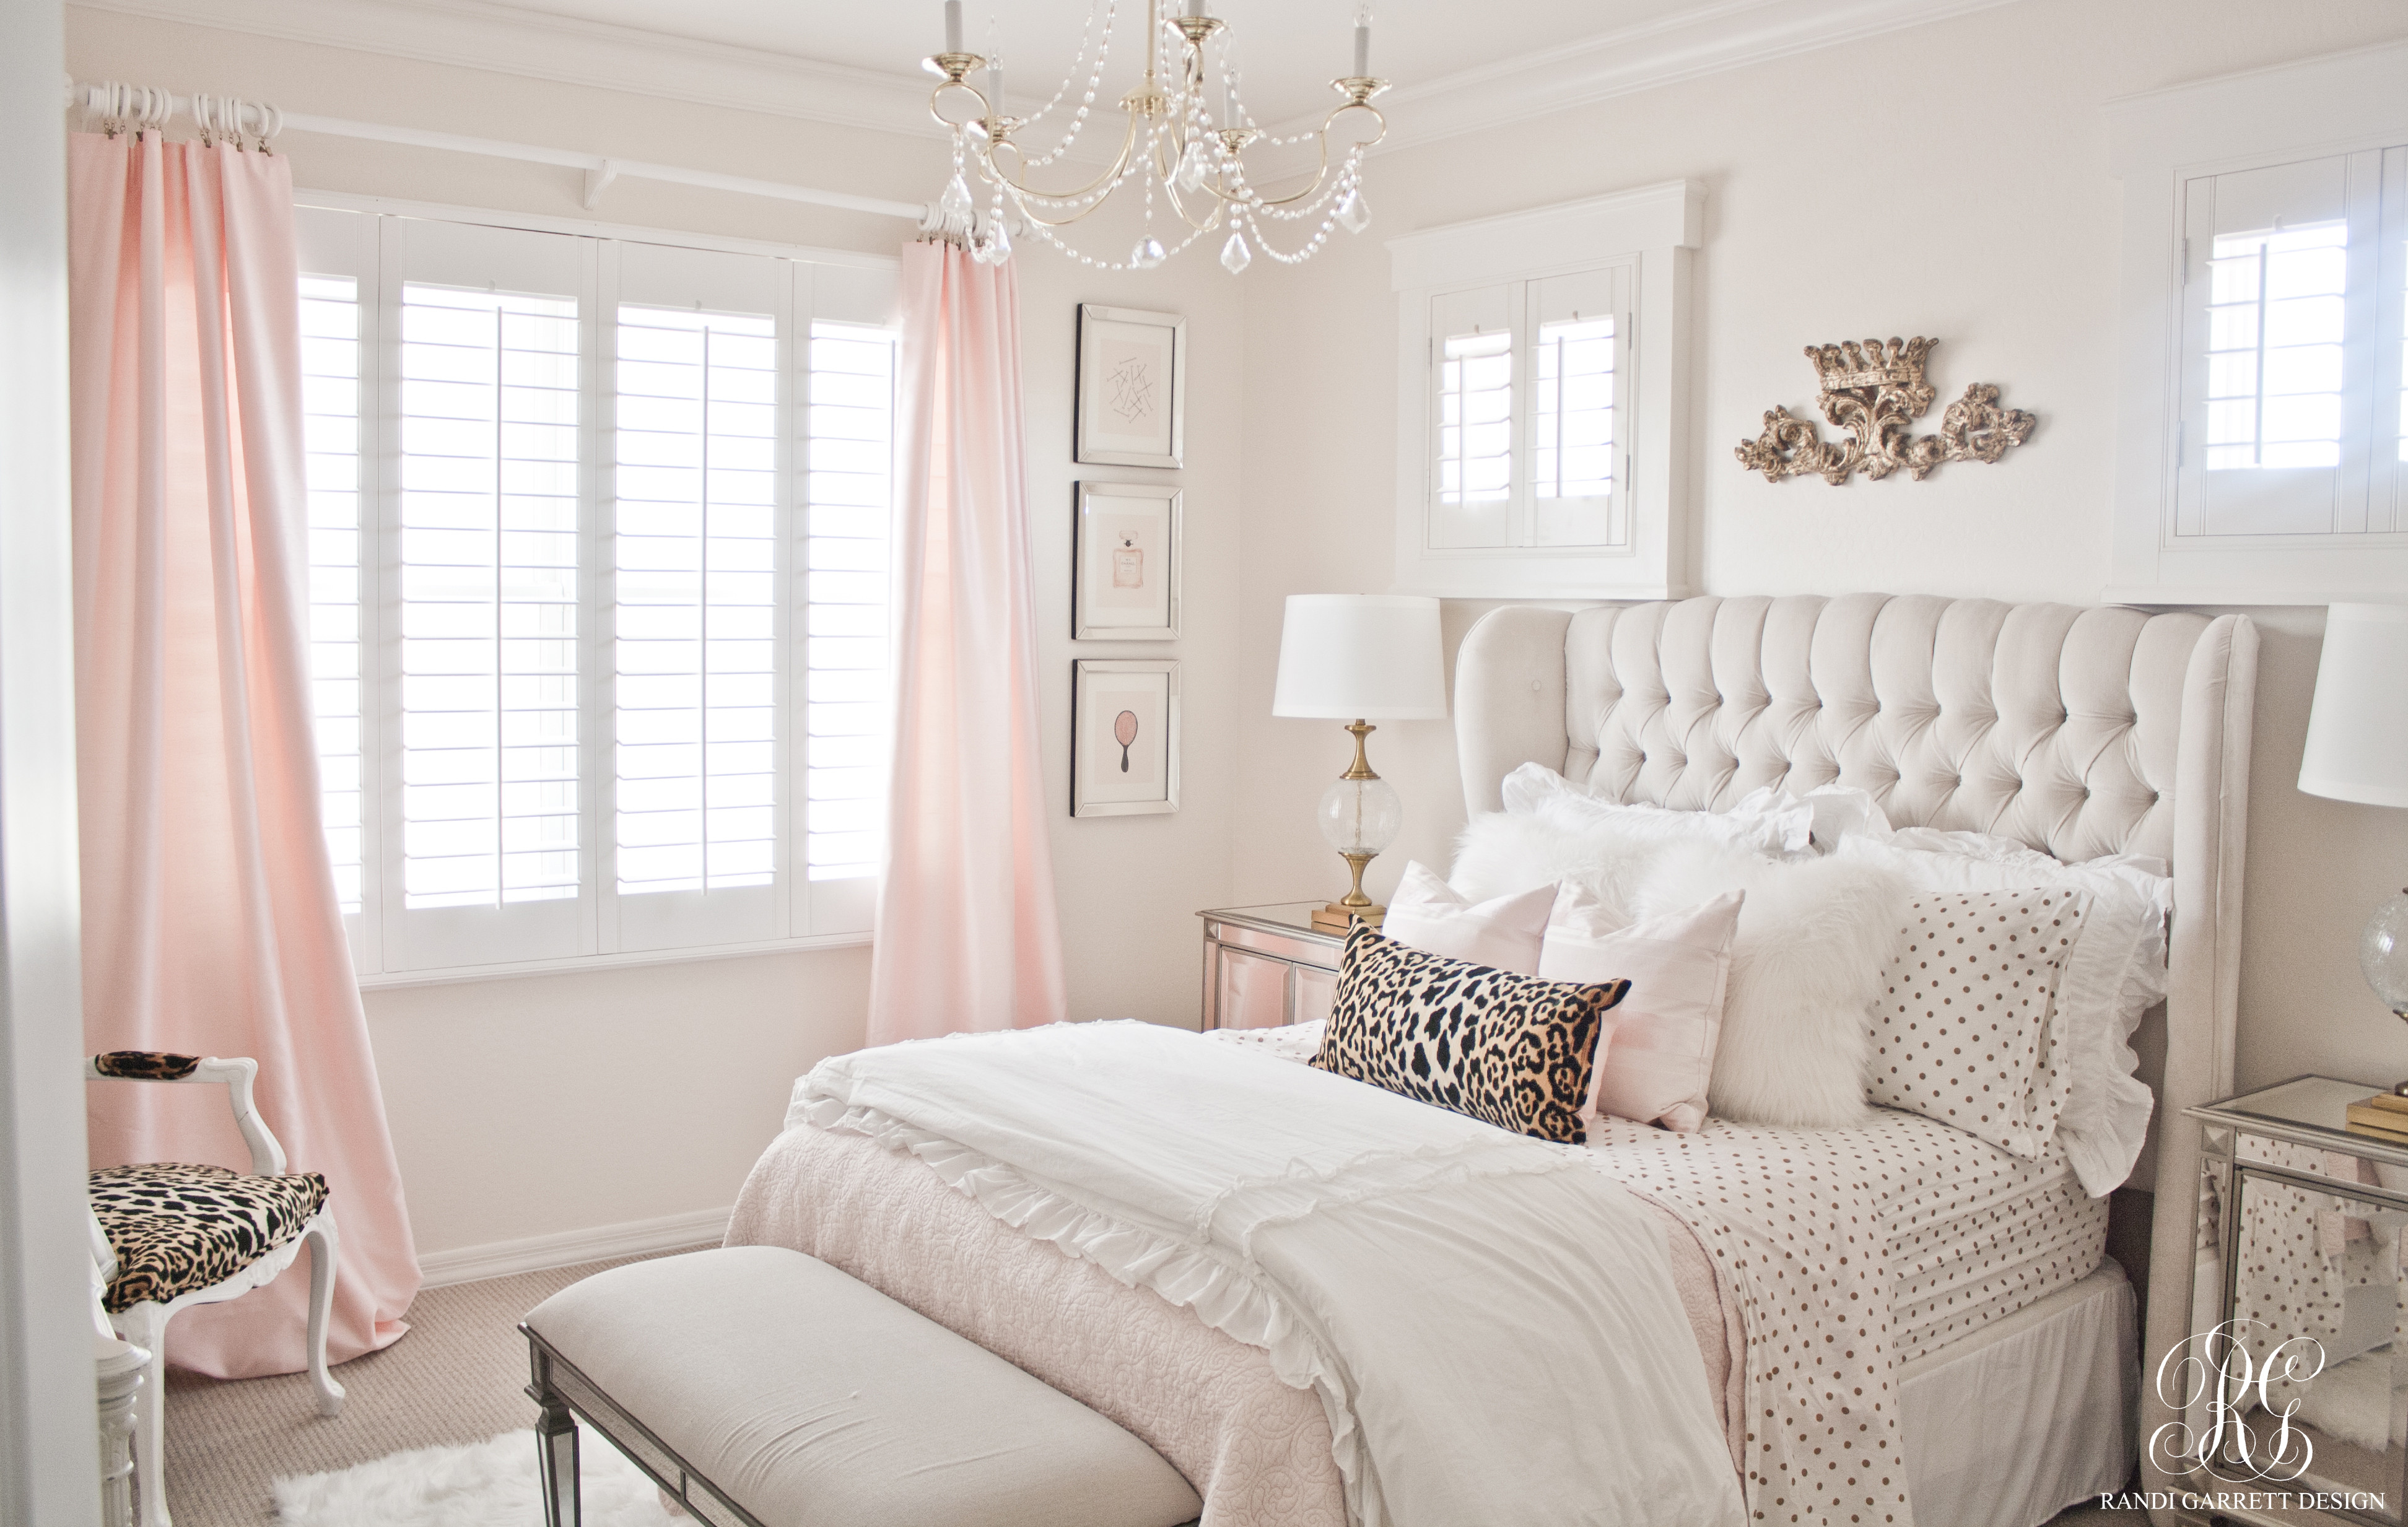 White and Gold Bedroom Decor Best Of Pink and Gold Girl S Bedroom Makeover Randi Garrett Design